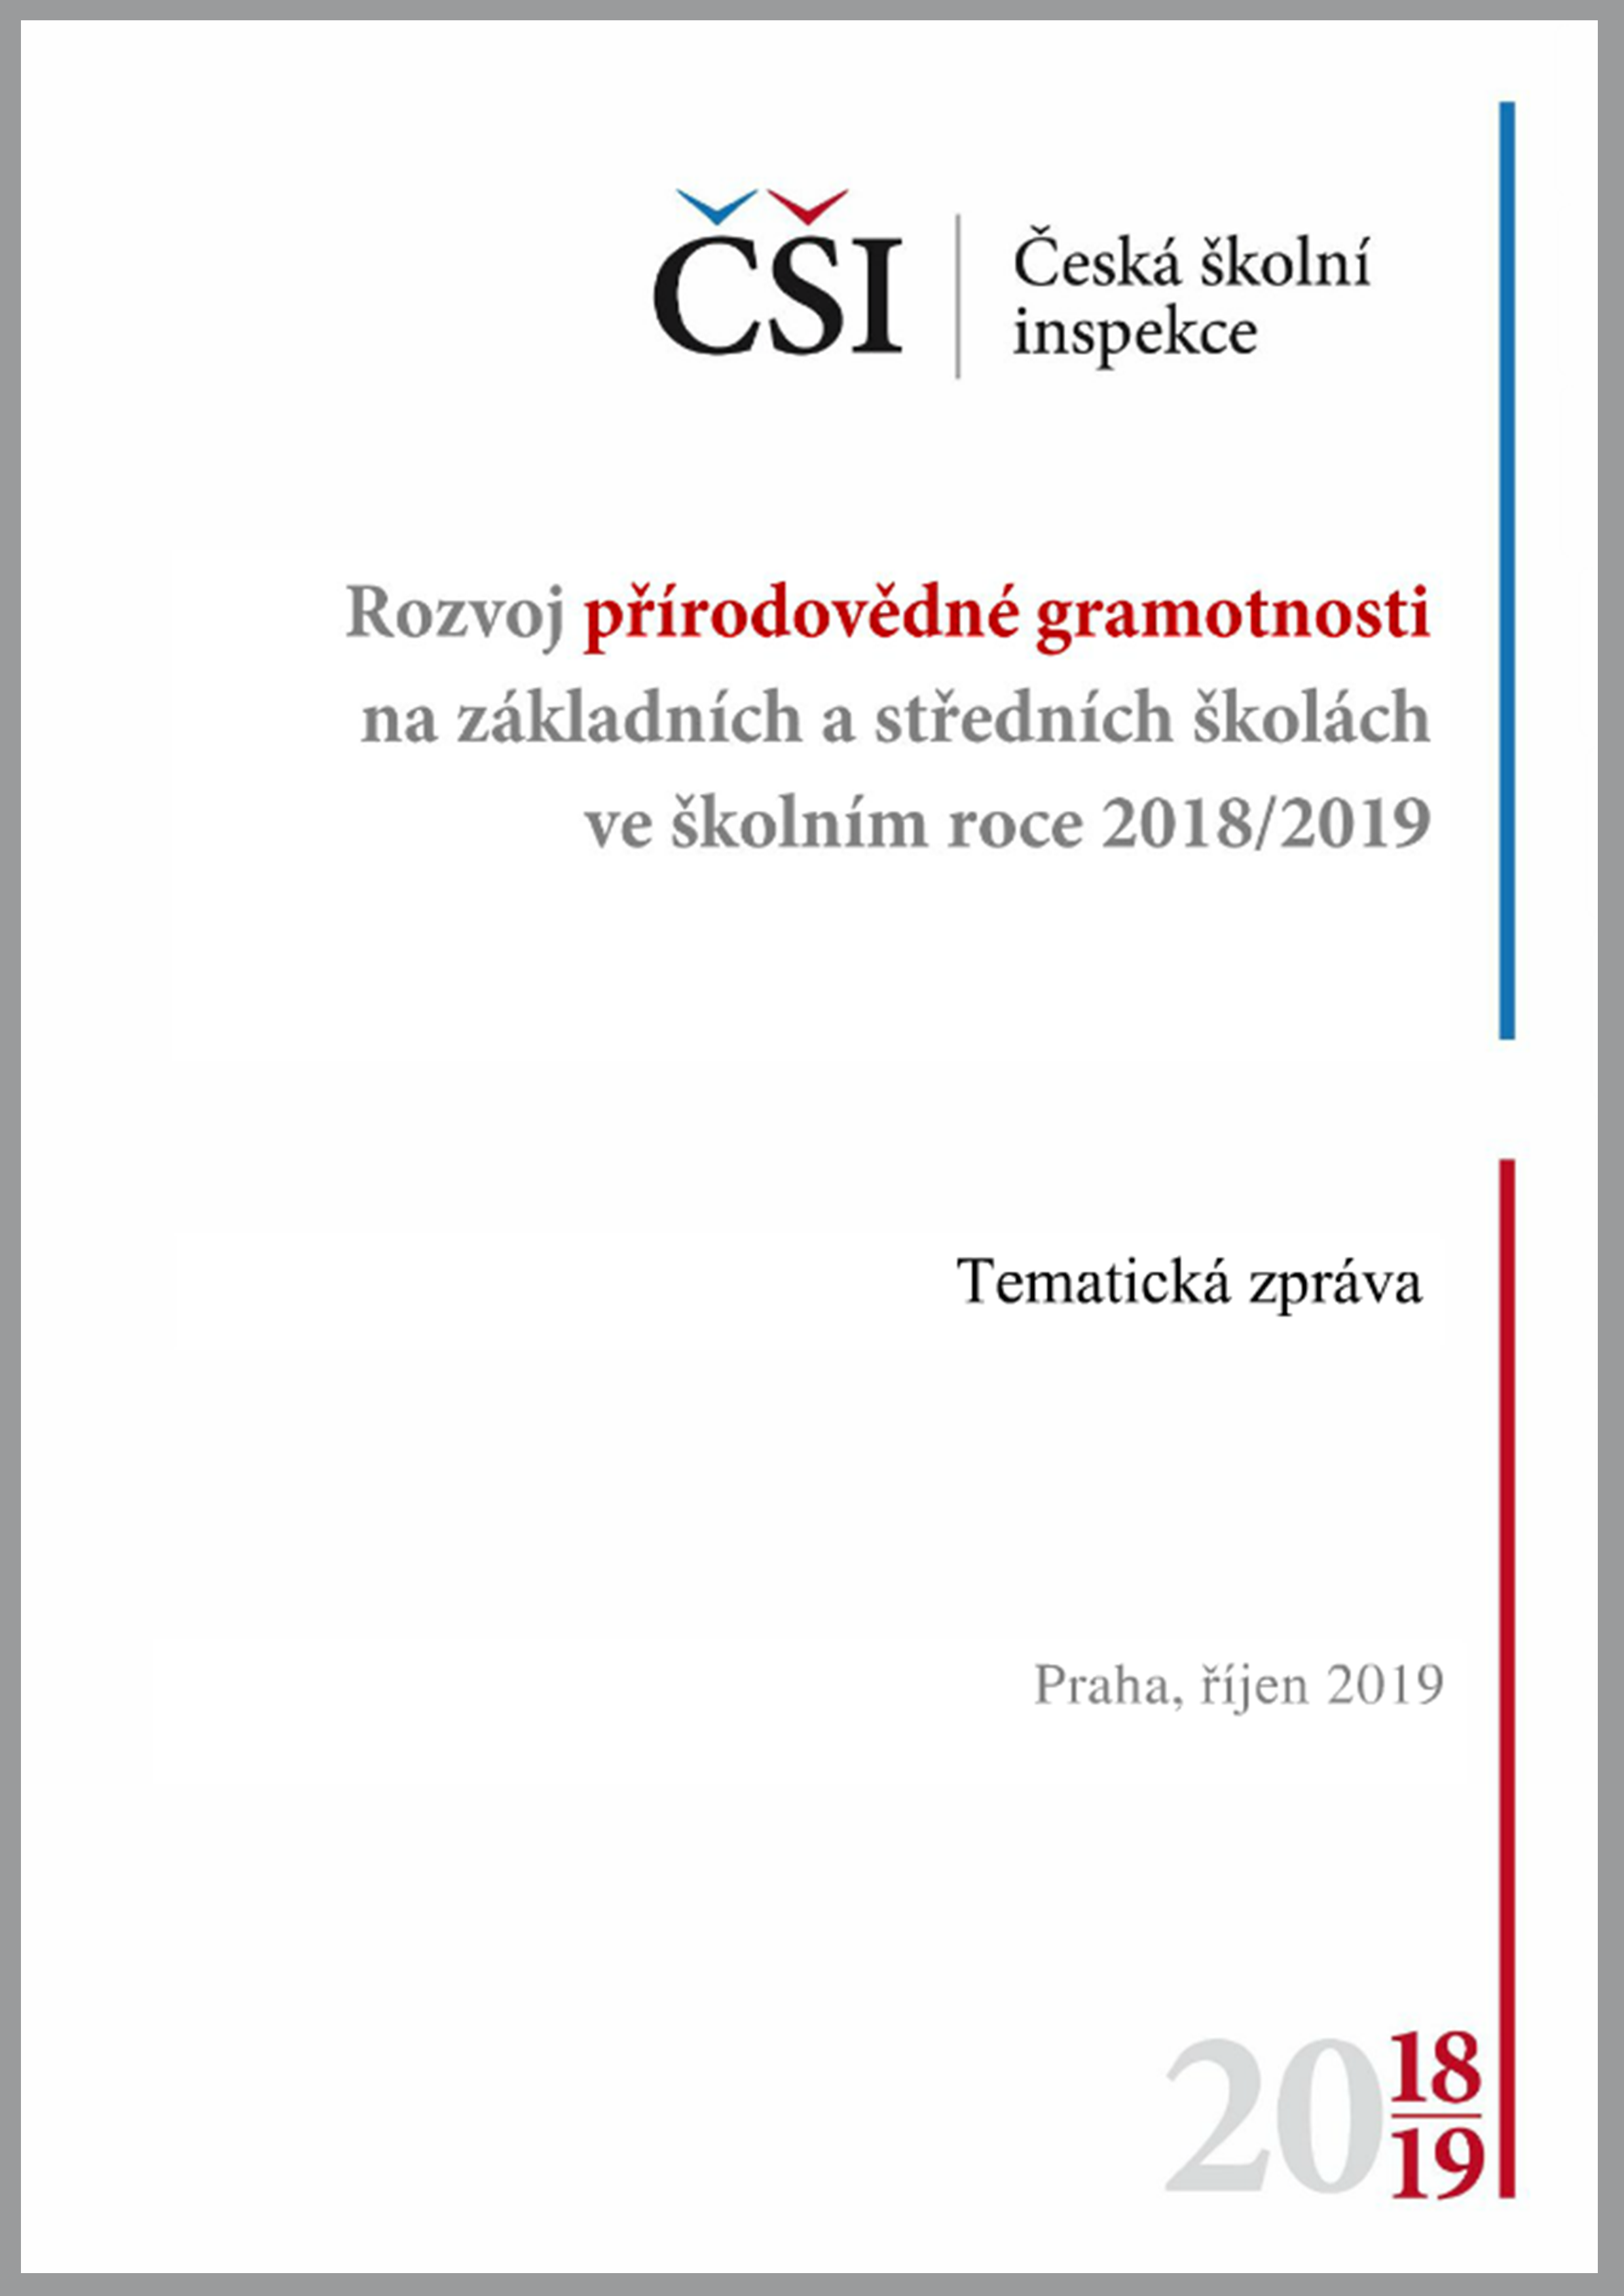 Tematická zpráva - Rozvoj přírodovědné gramotnosti na ZŠ a SŠ ve školním roce 2018/2019